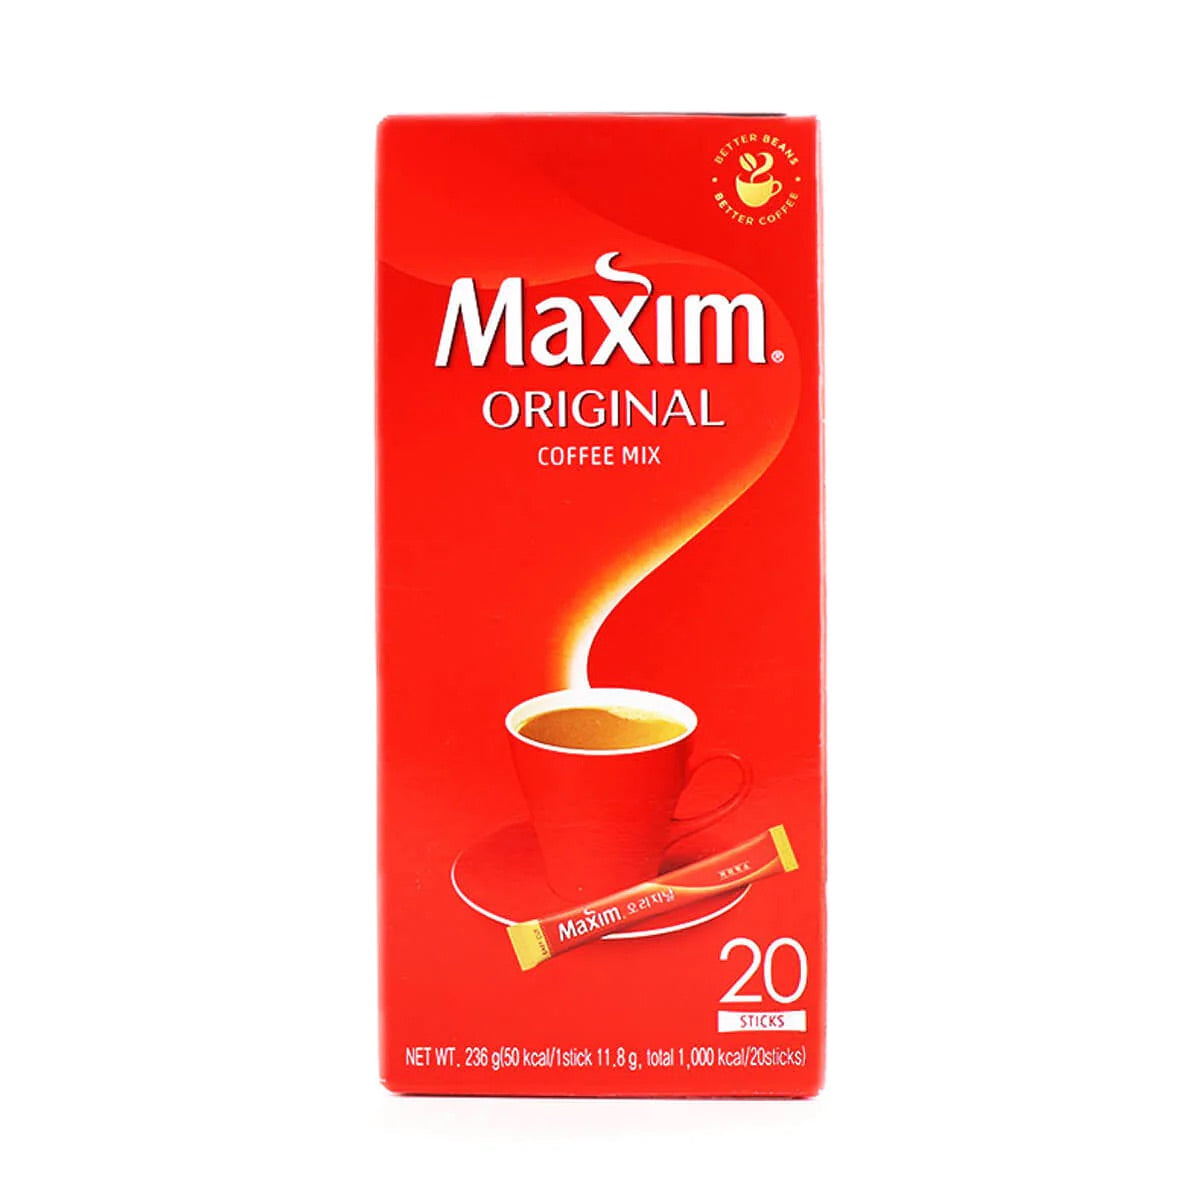 Maxim Original Coffee Mix - 20 Count - 0